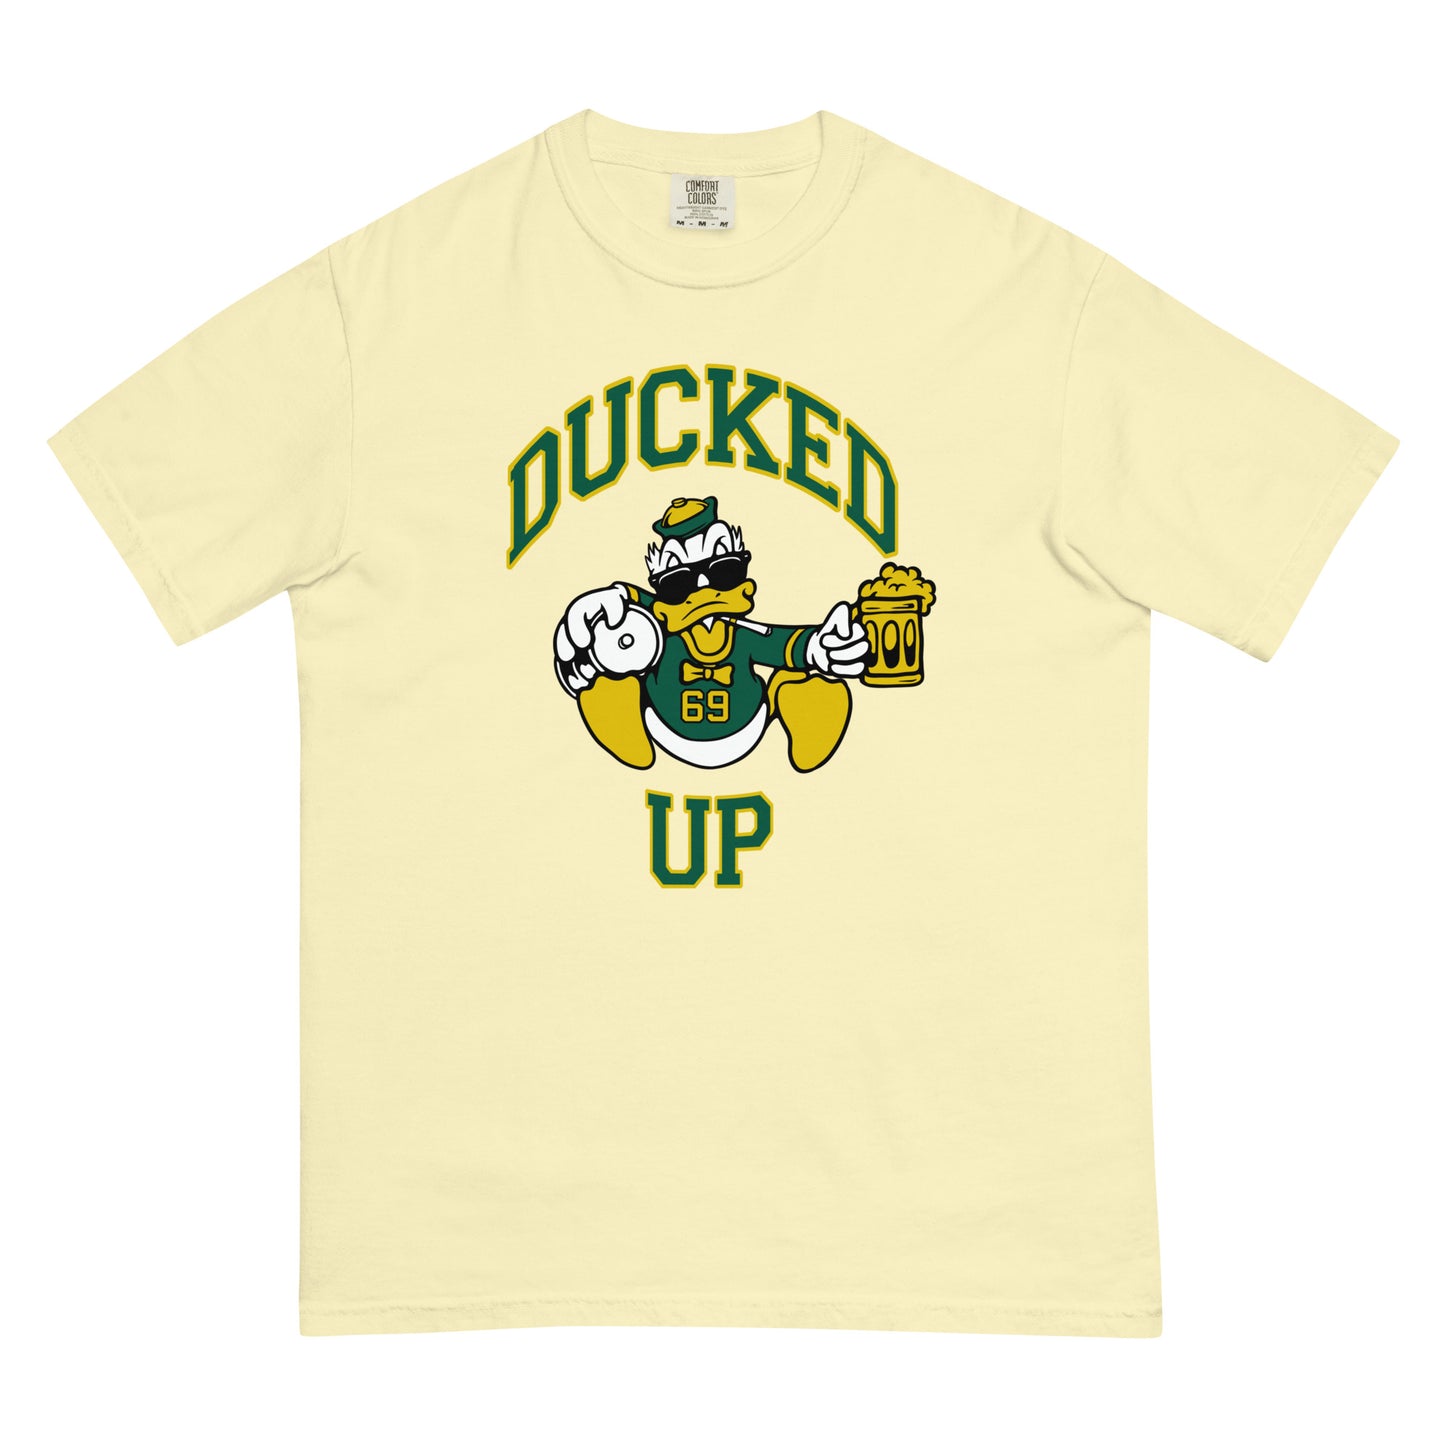 Ducked Up II t-shirt